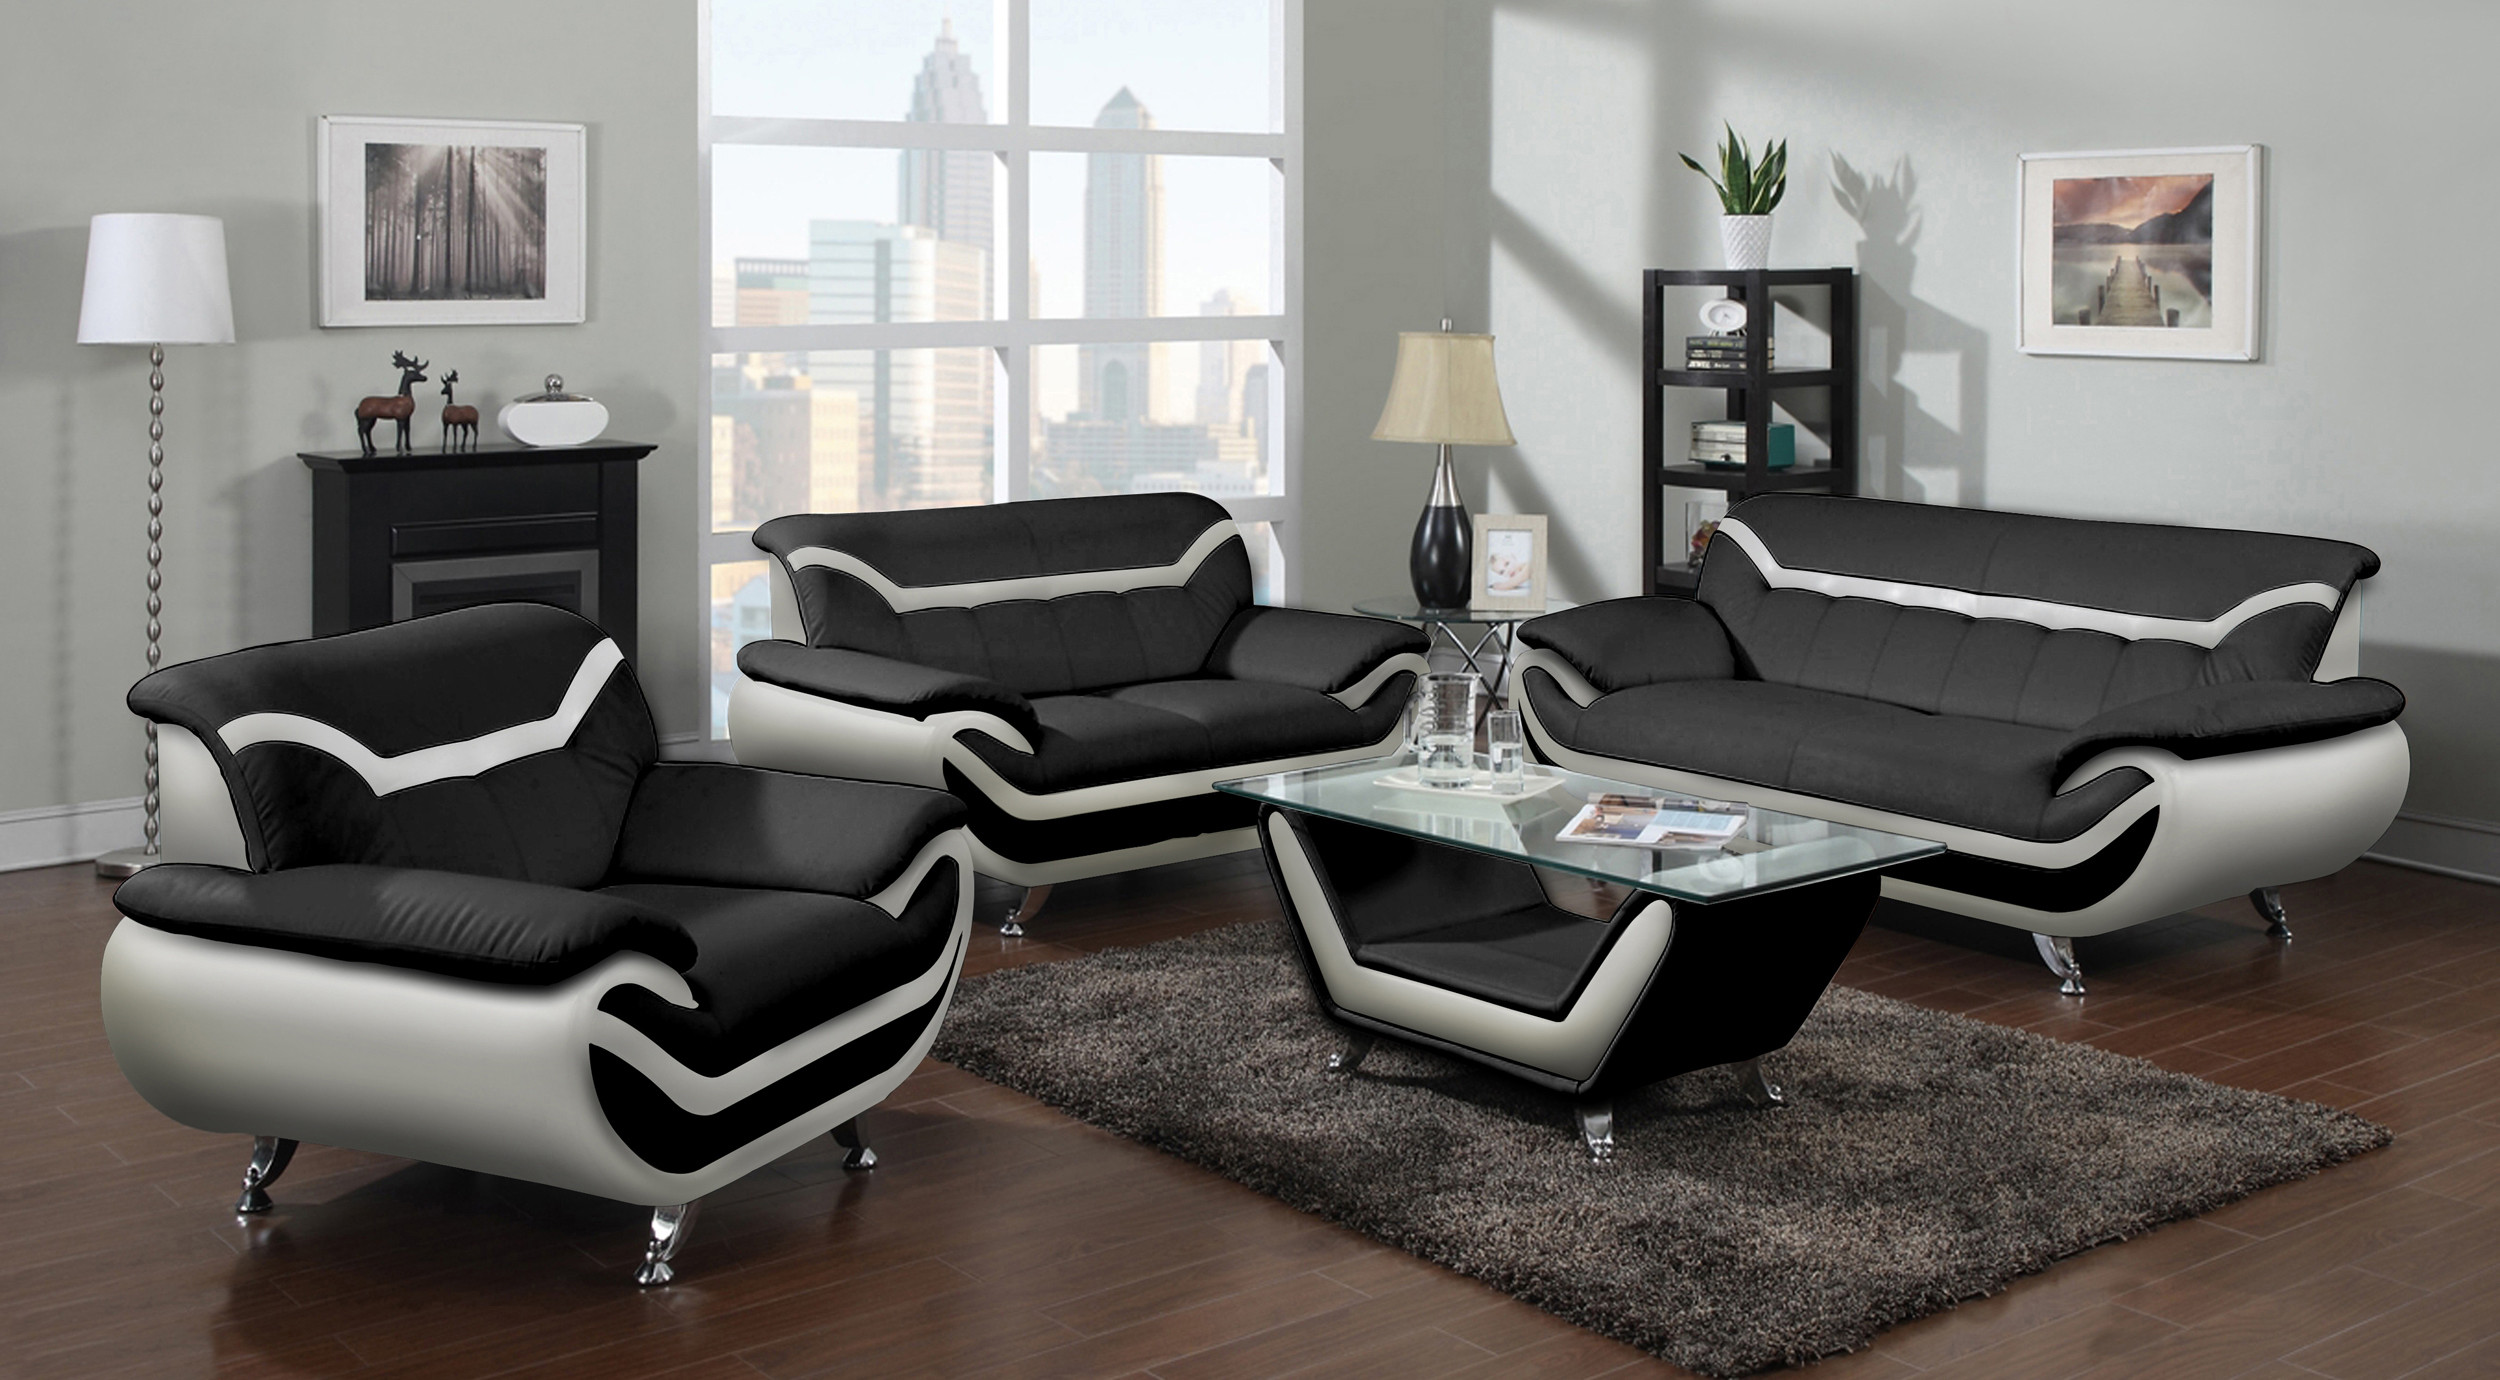 Modern Leather Living Room Set
 715L Black and White Leather Contemporary Living Room Set